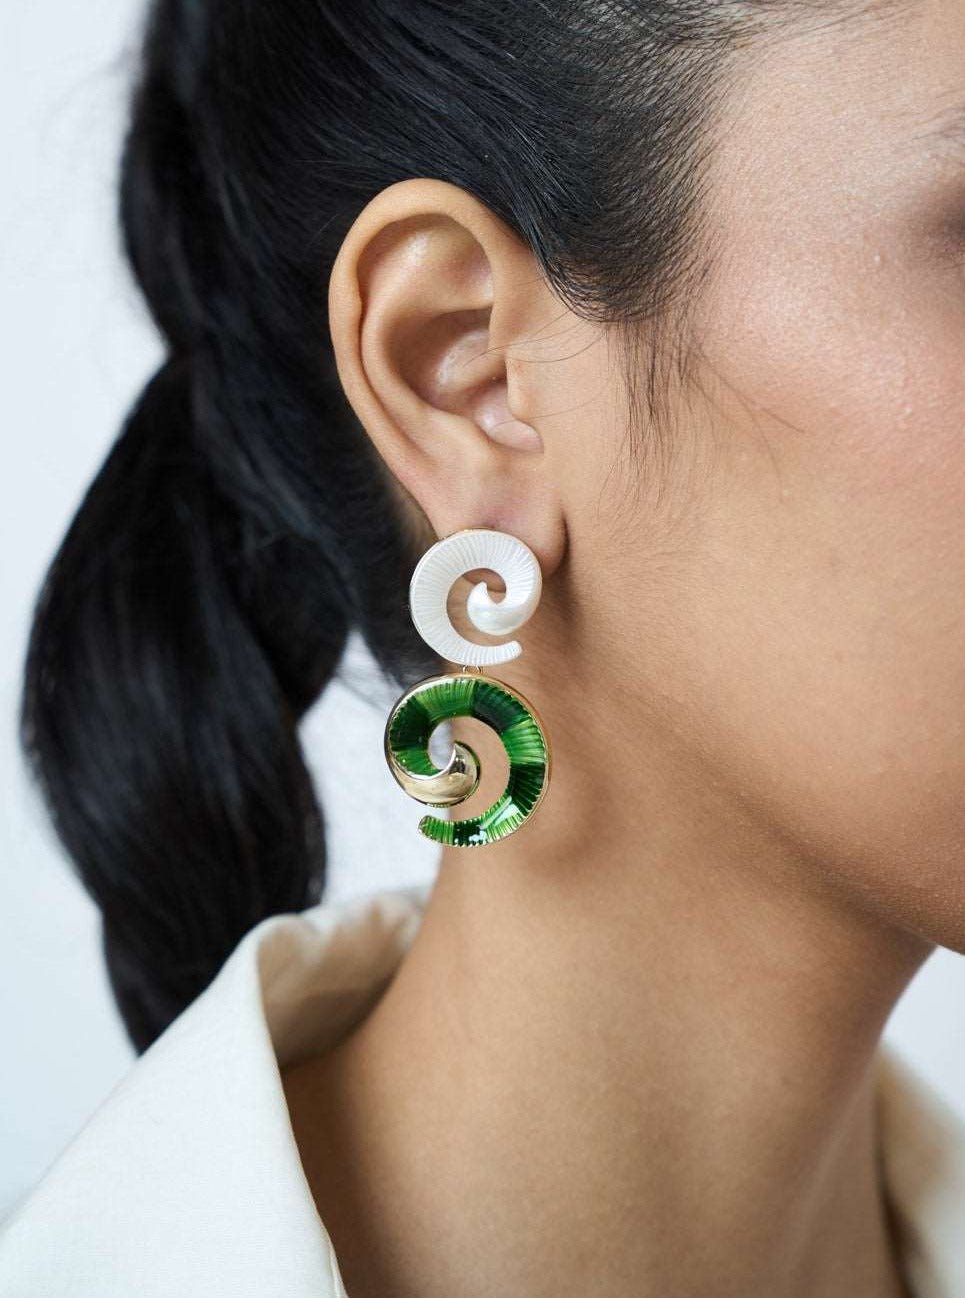 Amama,Ava Green Earrings